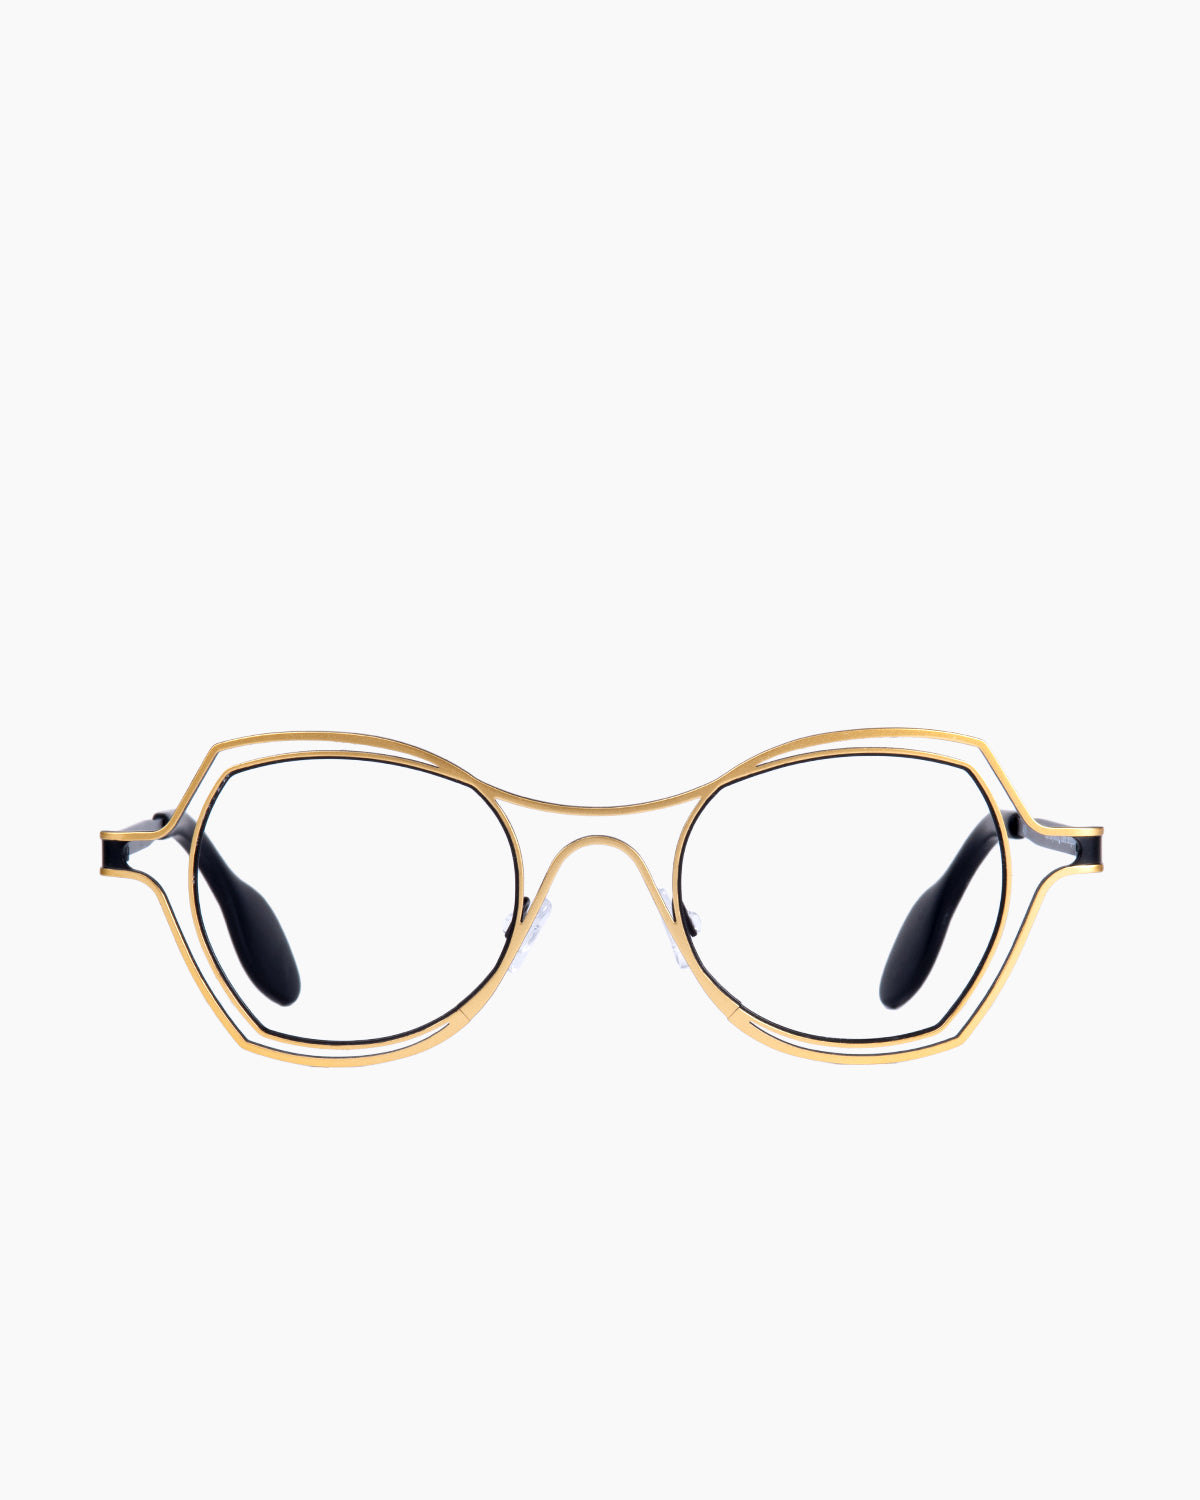 Theo - DAYTONA - 410 | glasses bar